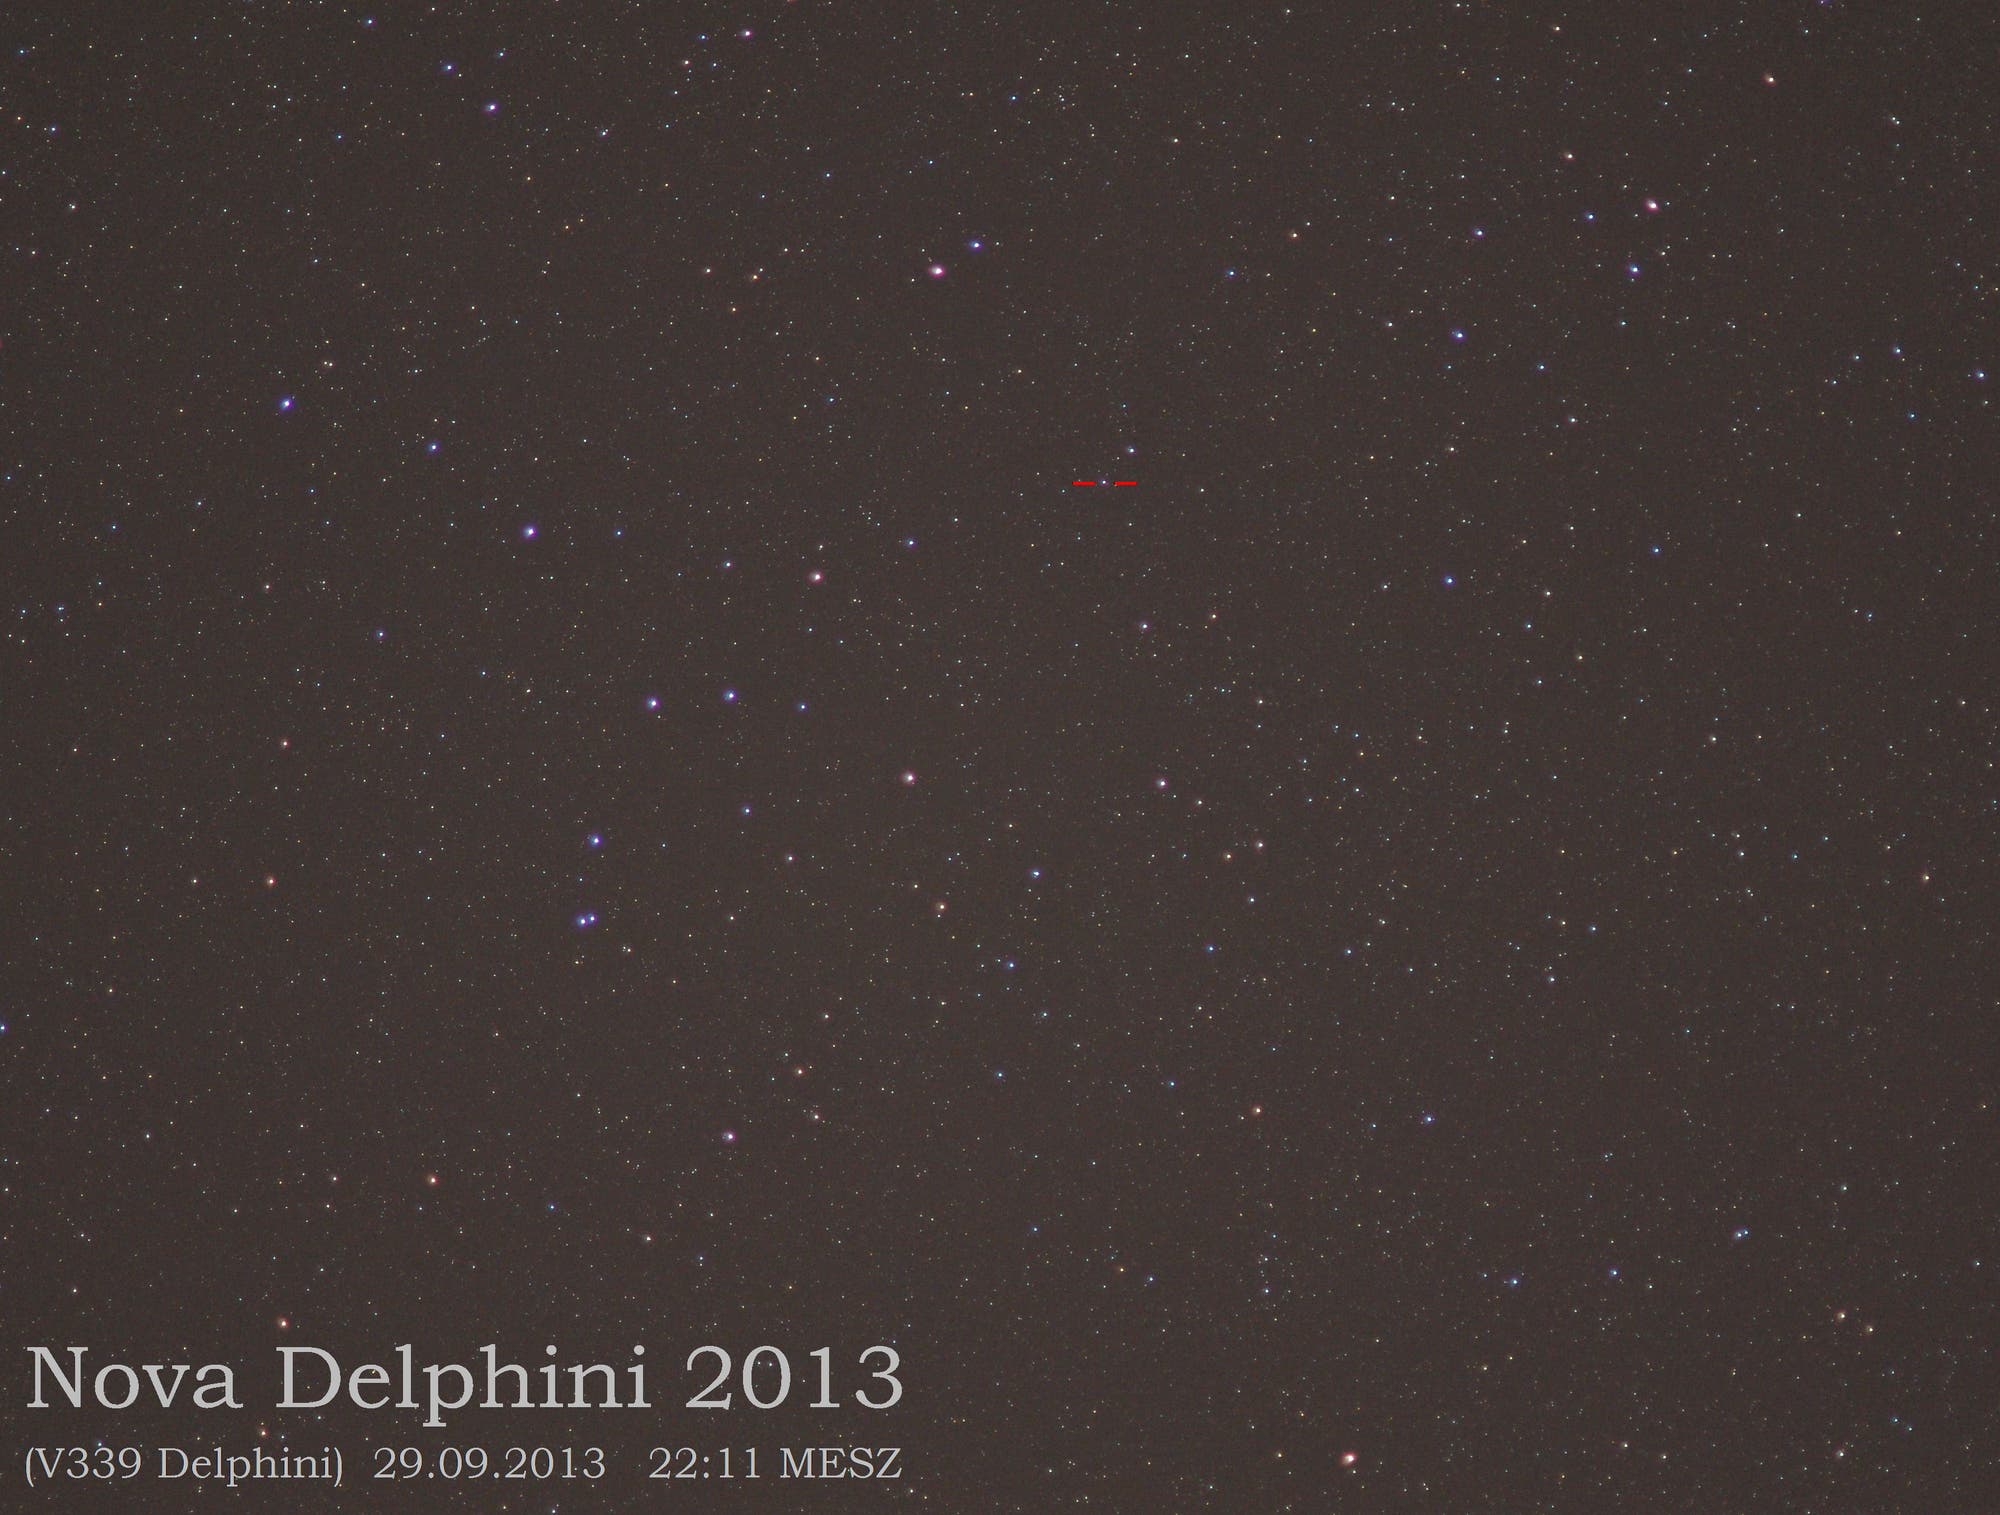 Nova Delphini 2013 am 29.09.2013 -Übersicht-